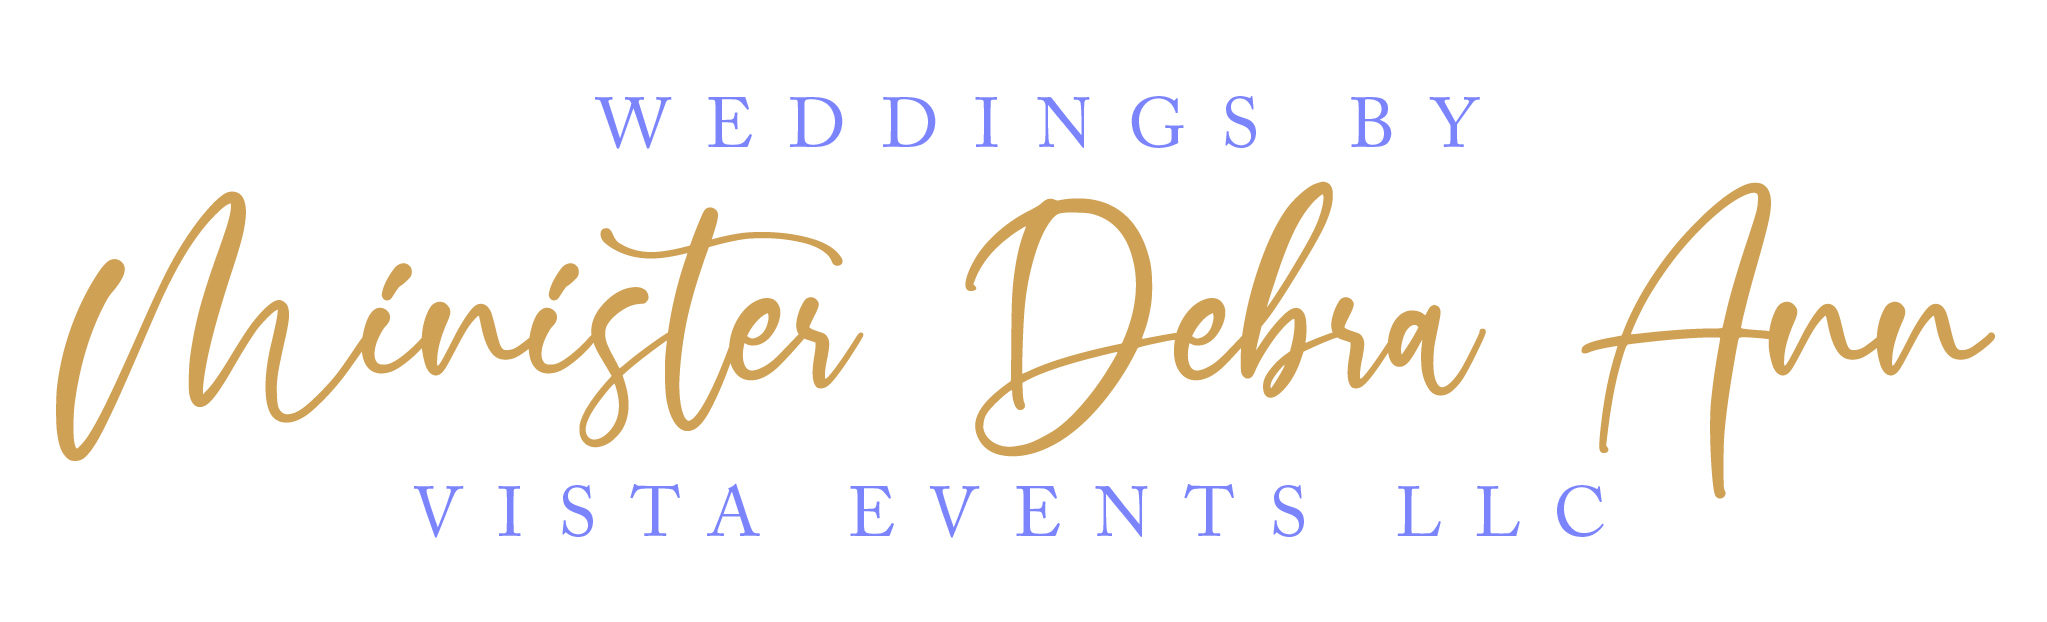 Weddings by Minister Debra Ann